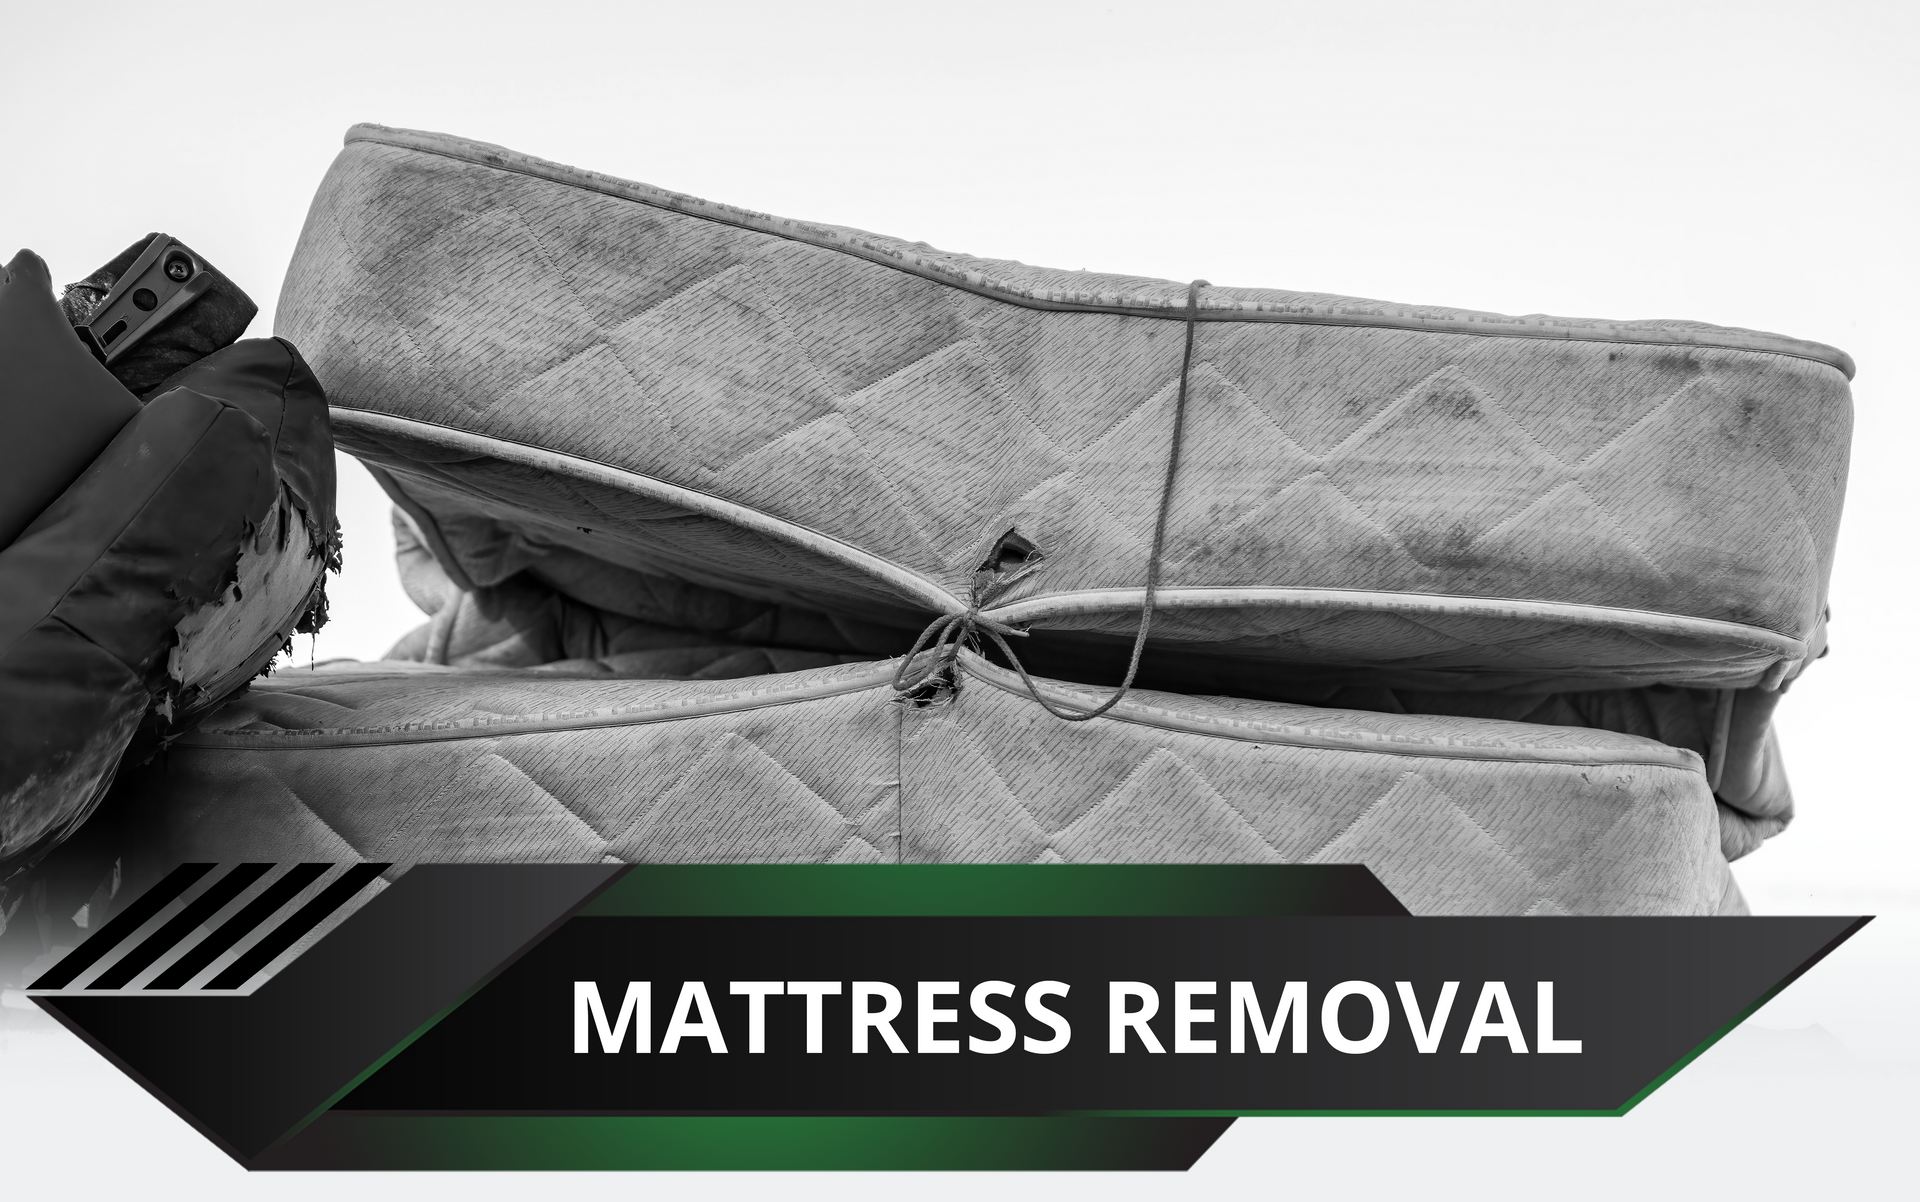 Mattress Removal in Madera, CA